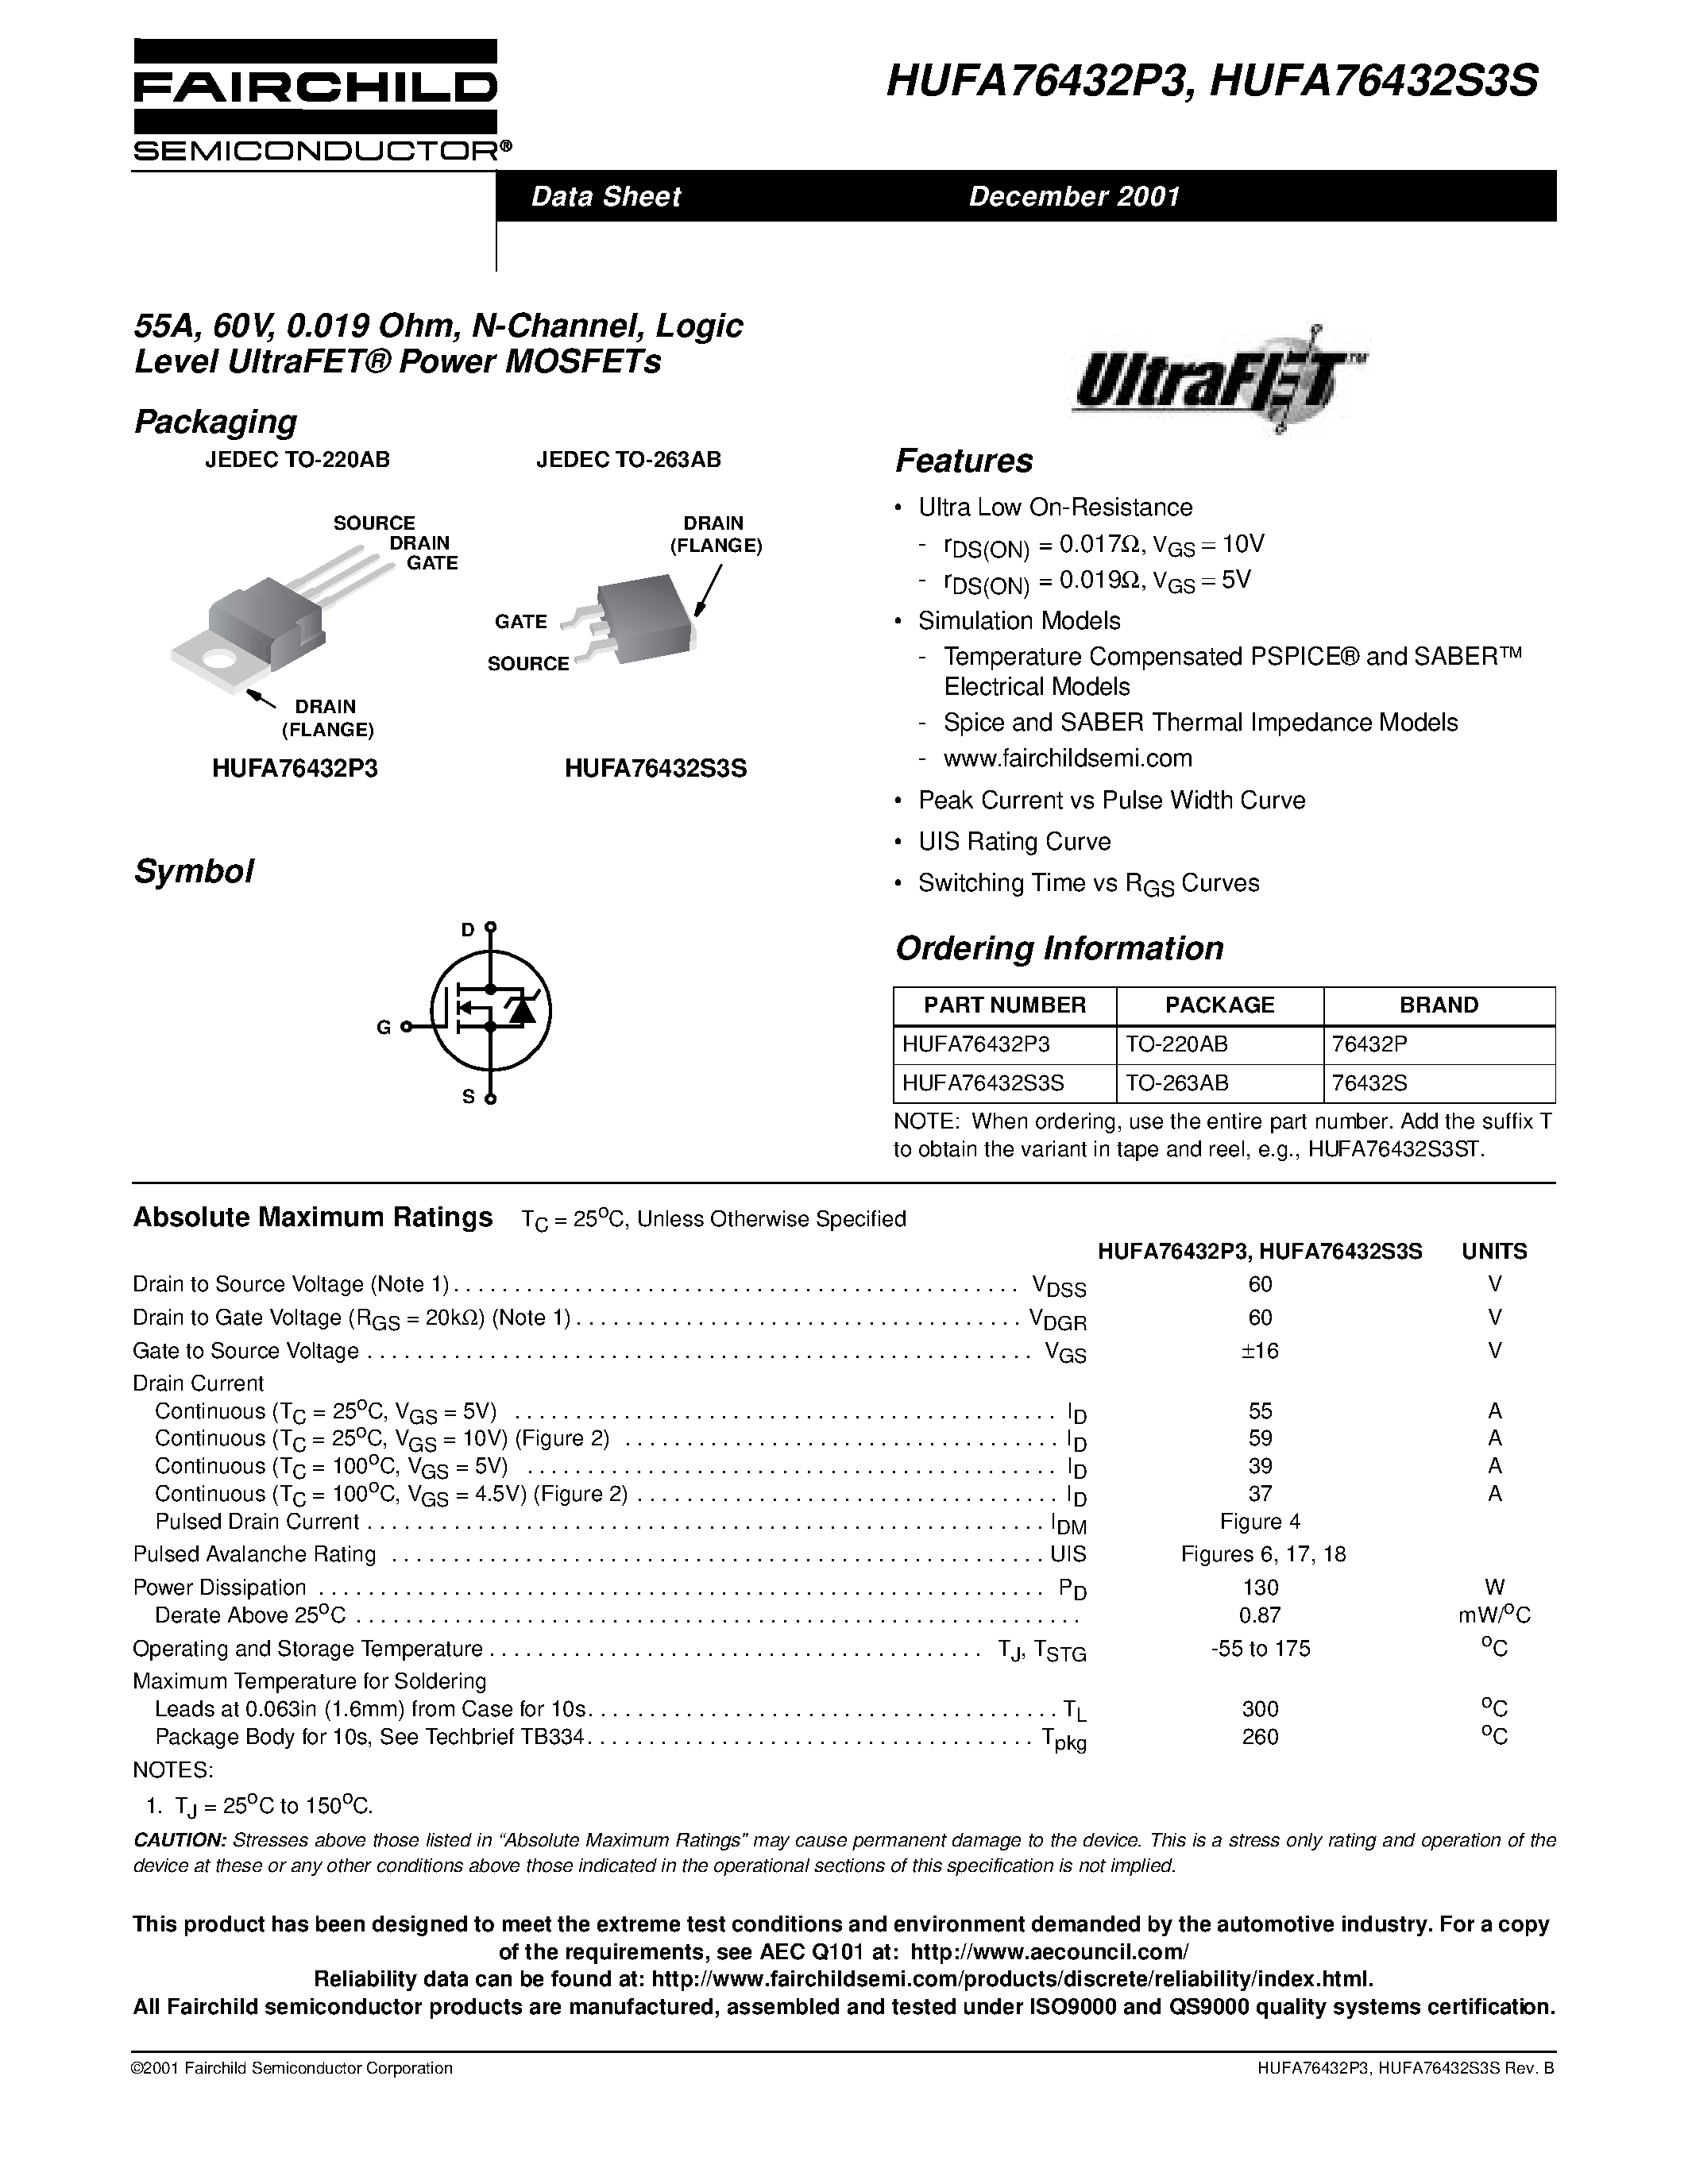 Даташит HUFA76432P3 - 55A/ 60V/ 0.019 Ohm/ N-Channel/ Logic Level UltraFET Power MOSFETs страница 1